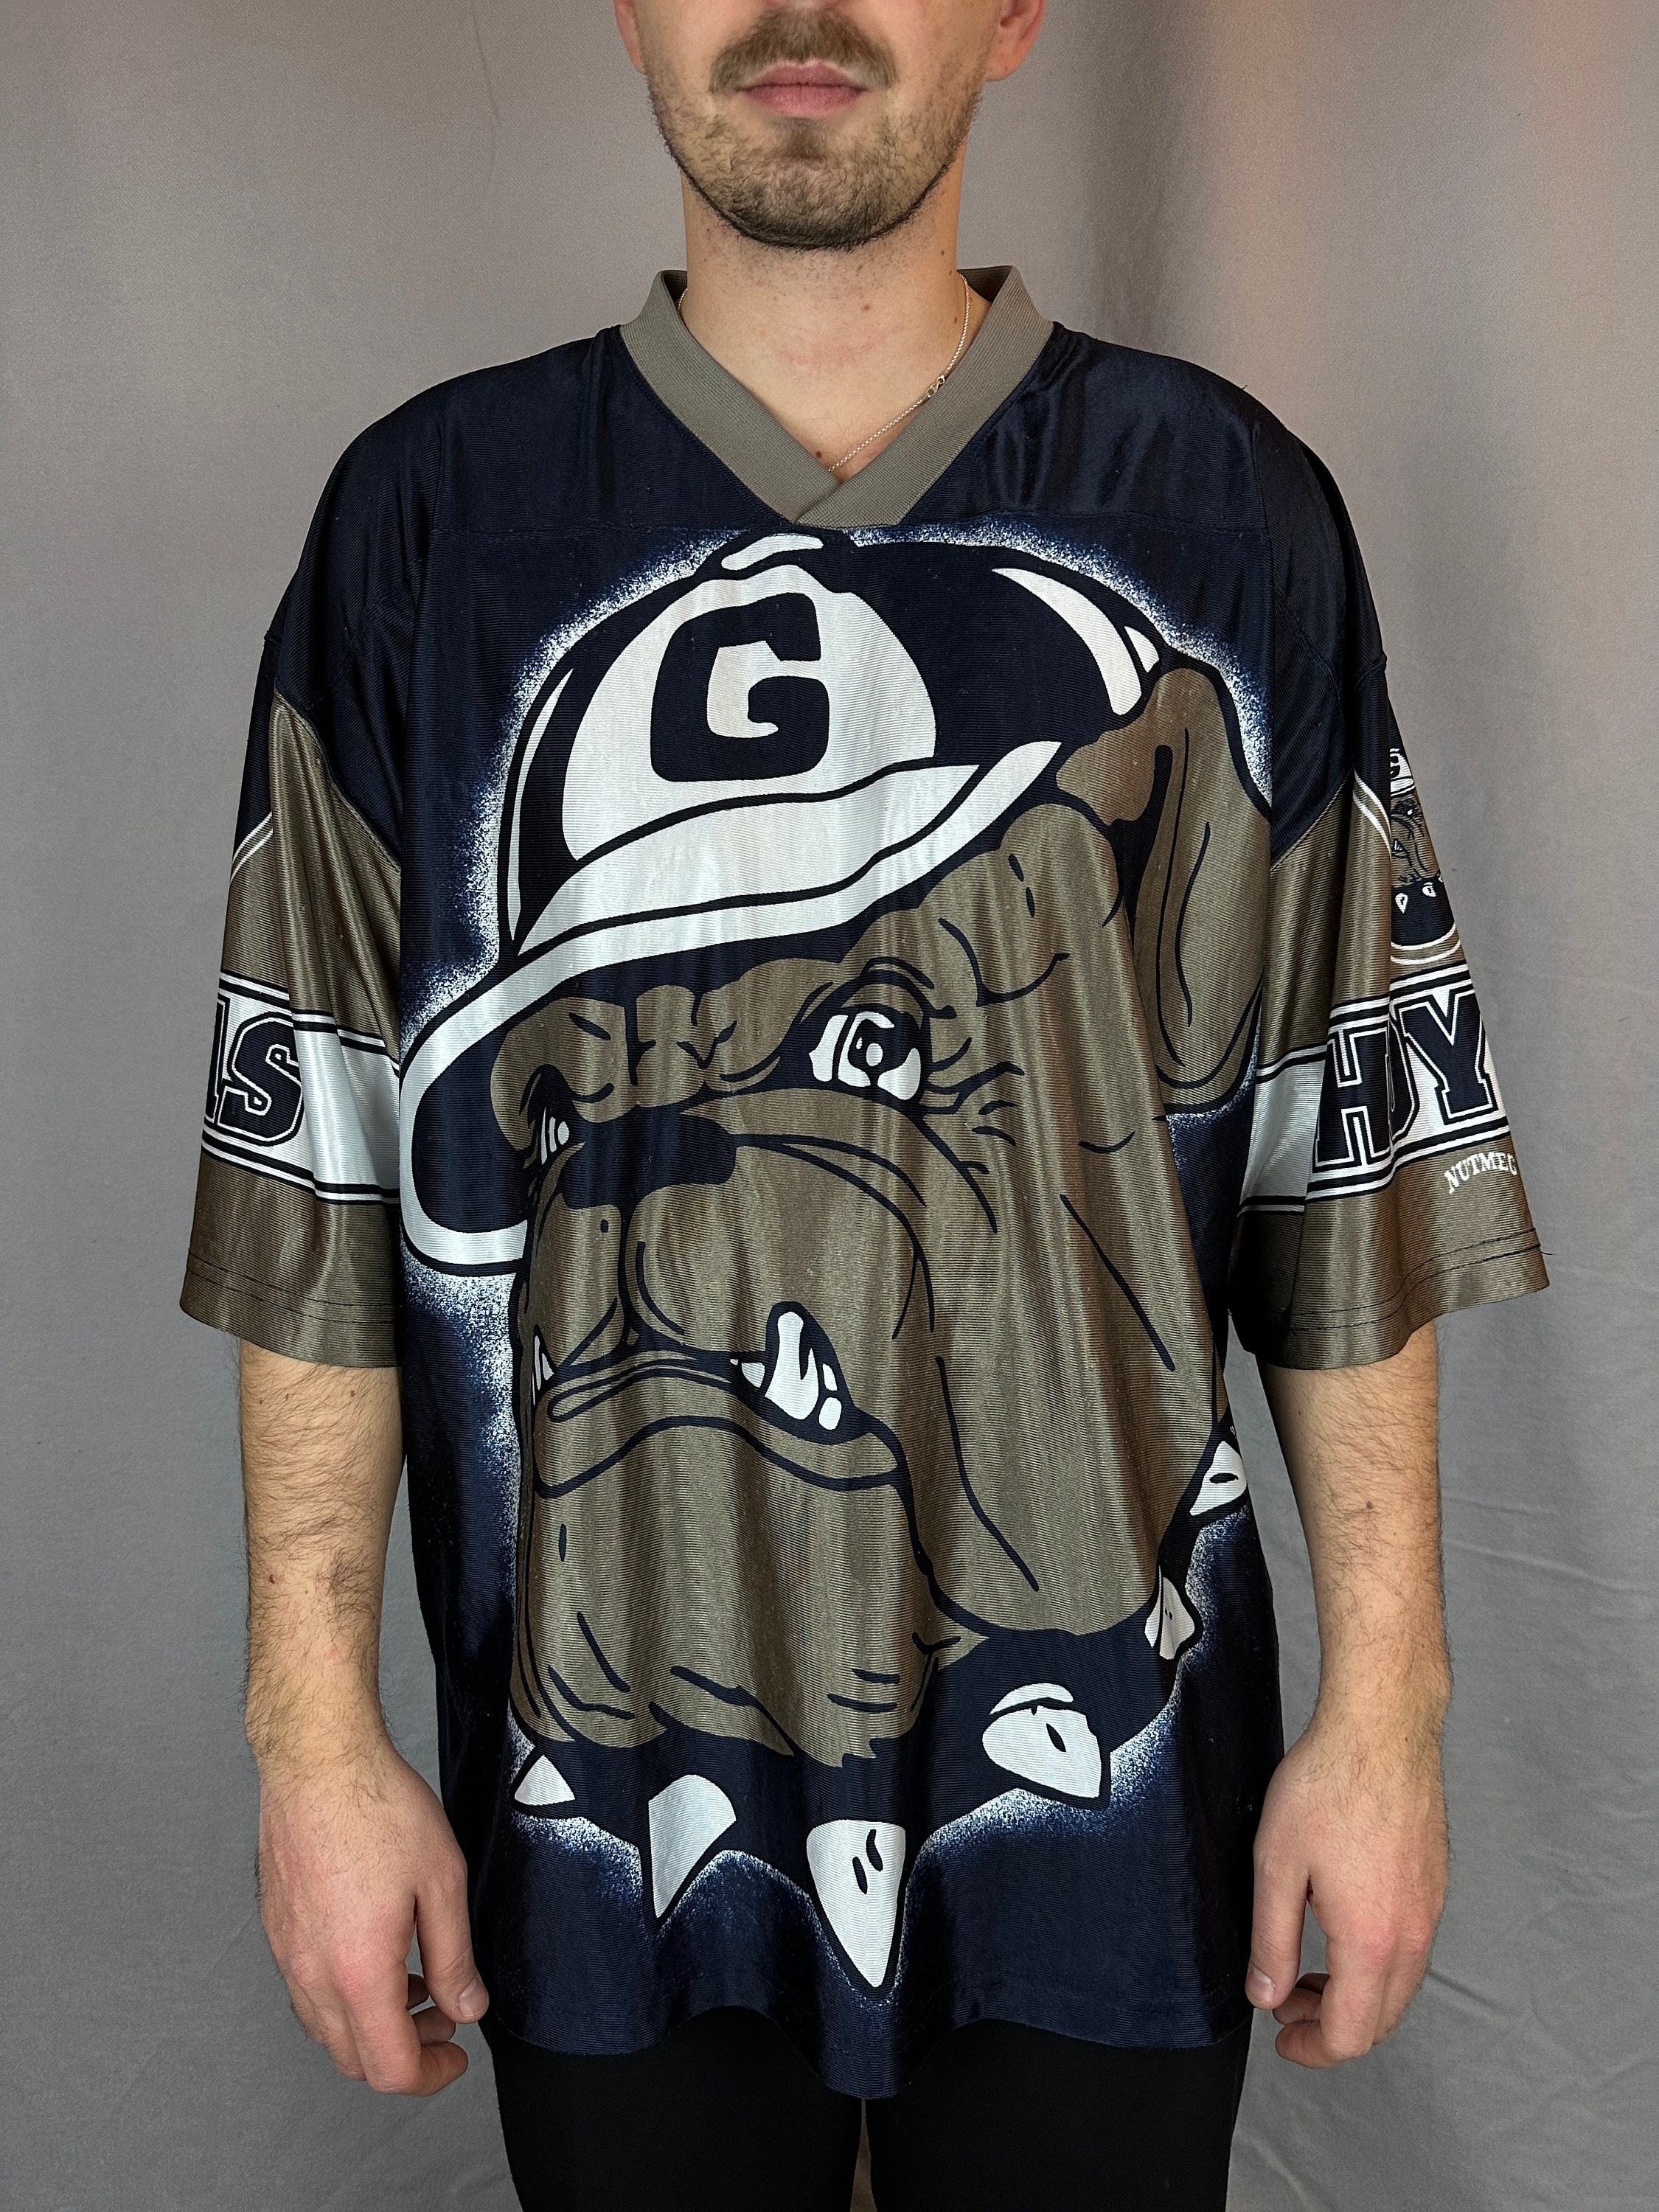 Mrewsen Men's Georgetown#3 Basketball Jersey Mesh Embroidery